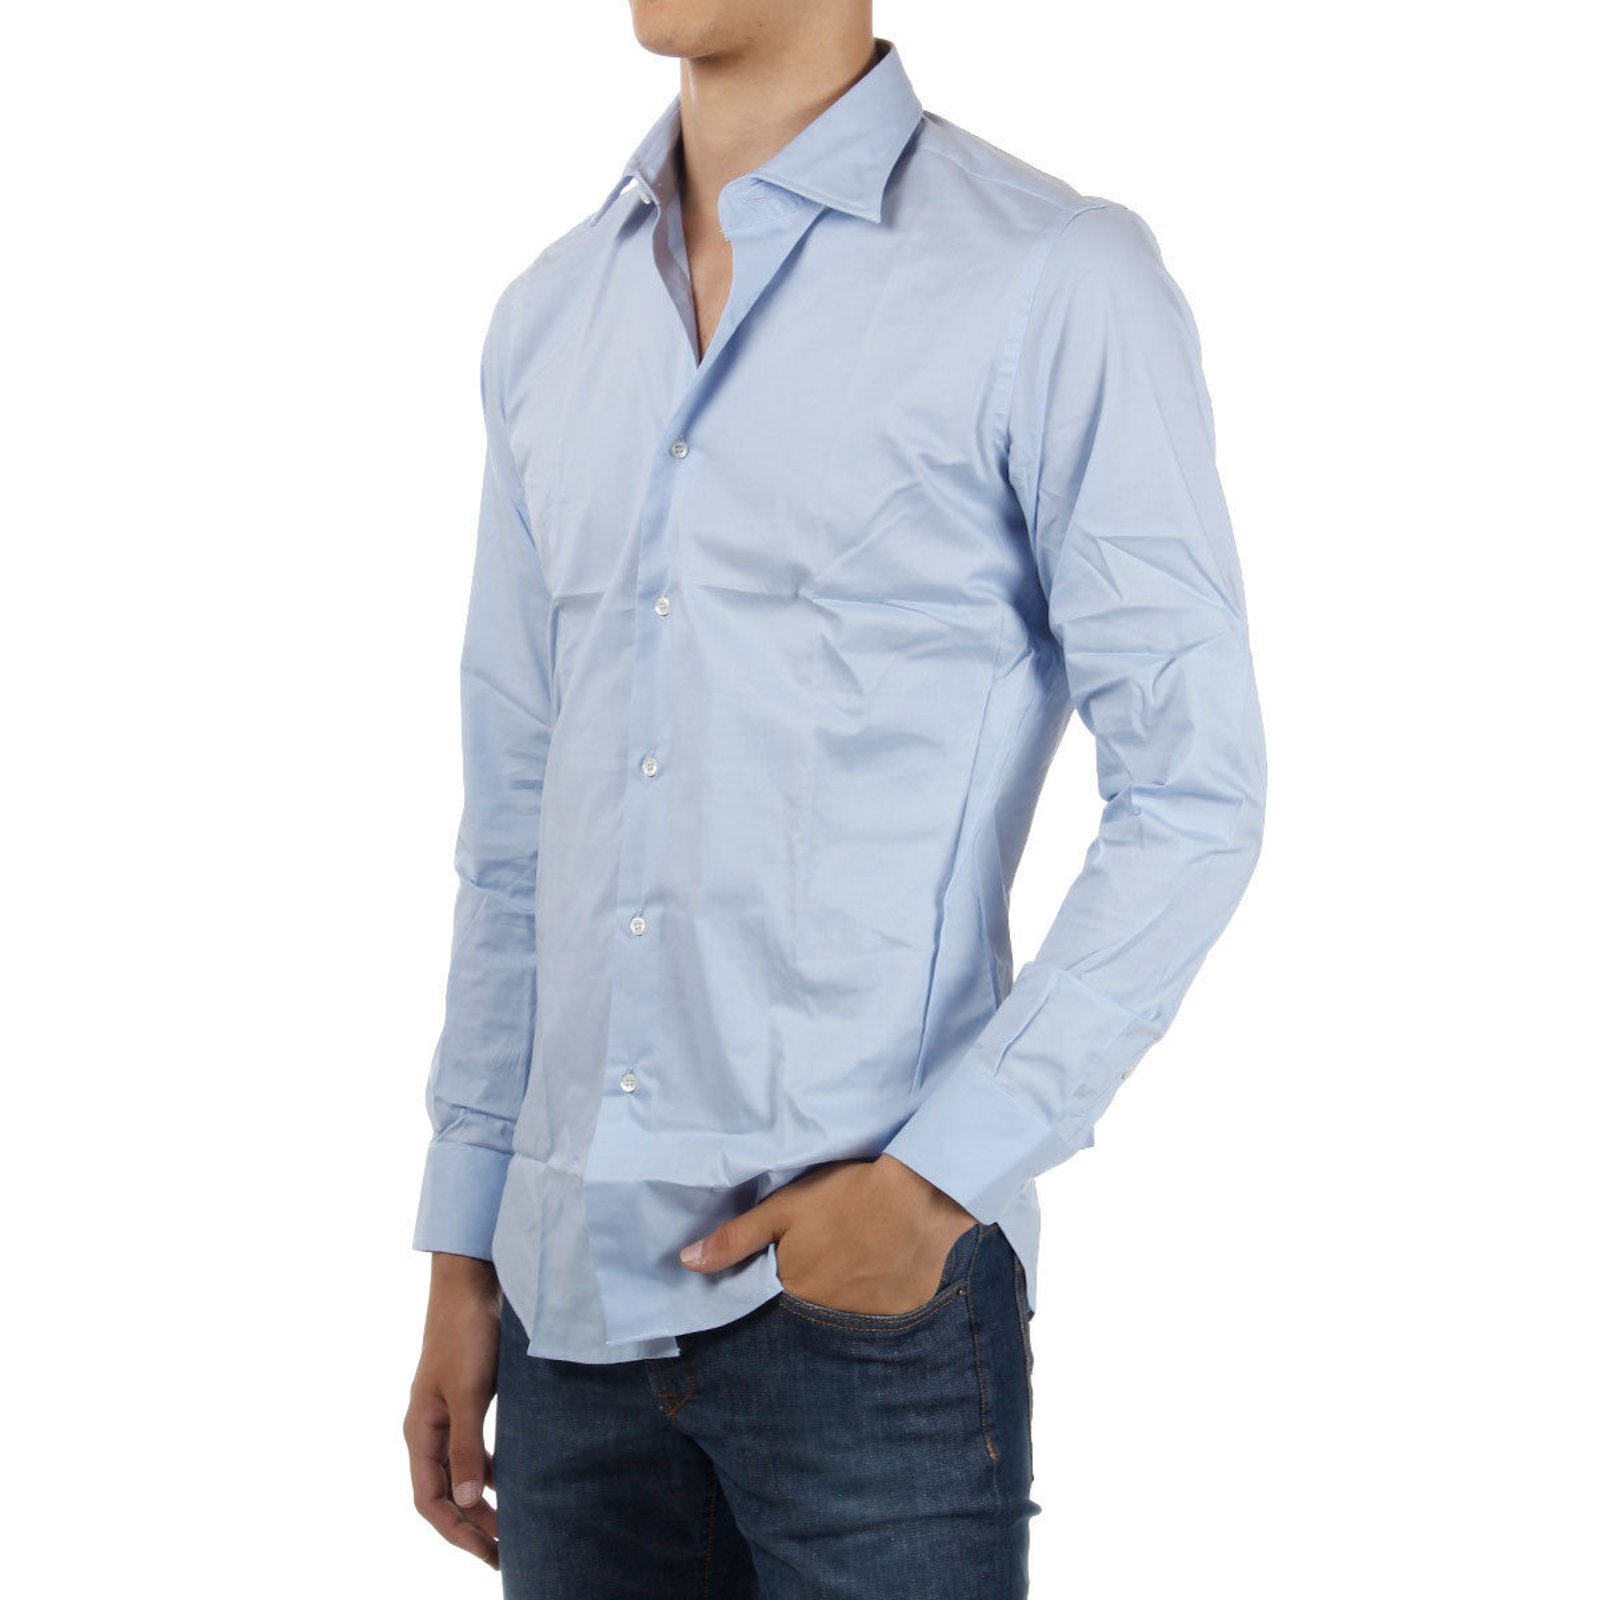 Emanuel Ungaro Ungaro brand new men's light blue stretch shirt Cotton ...